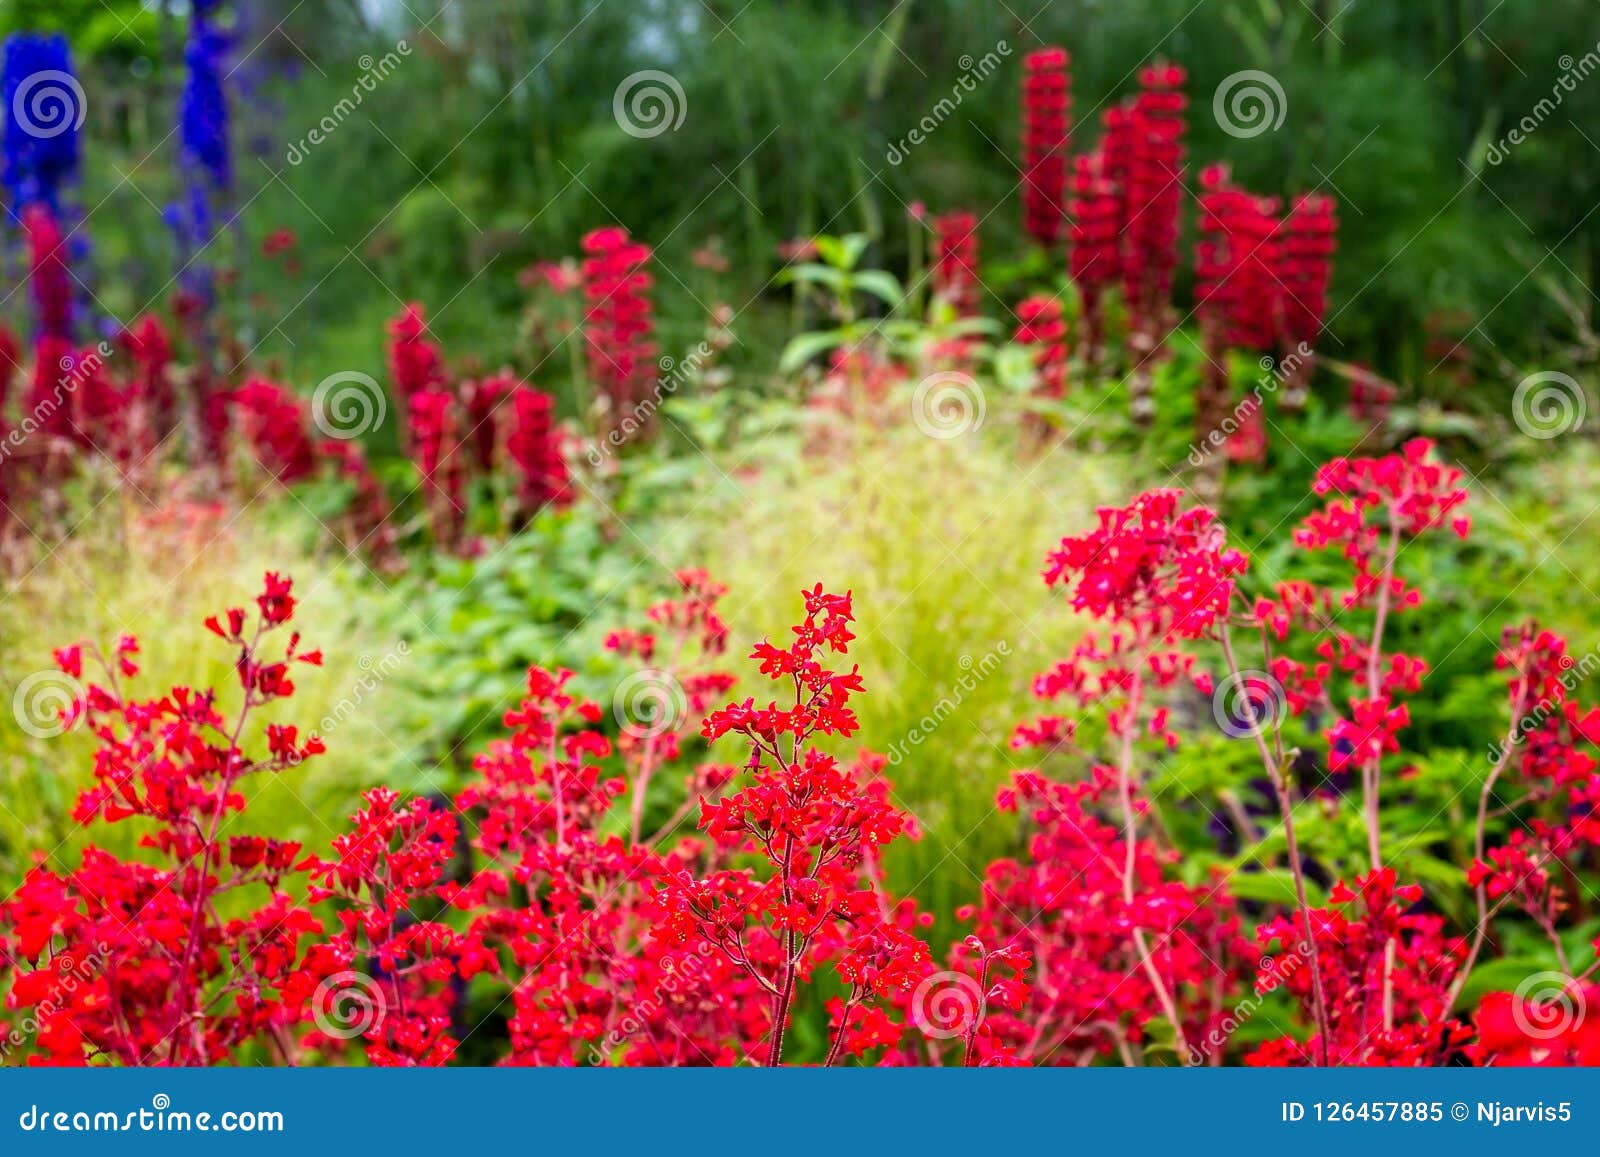 colourful and vibrant garden borde